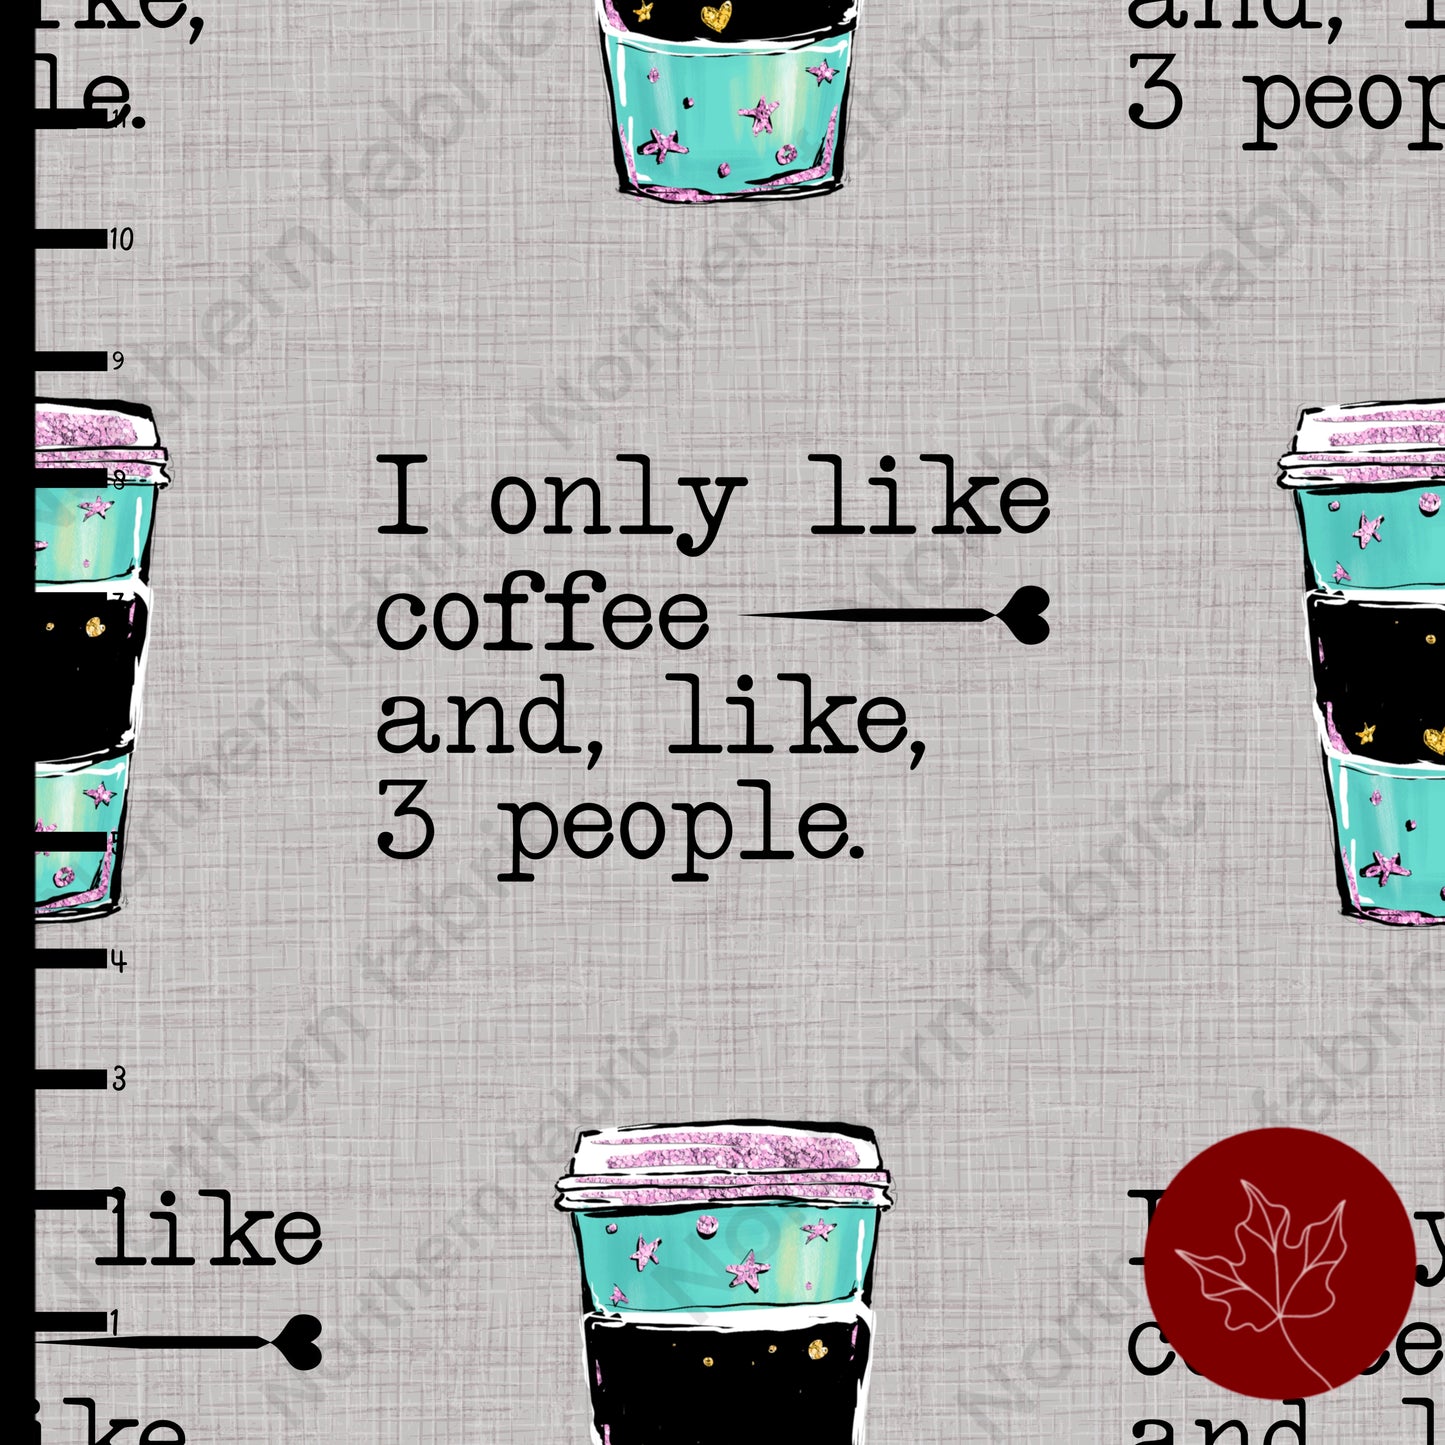 I only like coffee, and like 3 people.